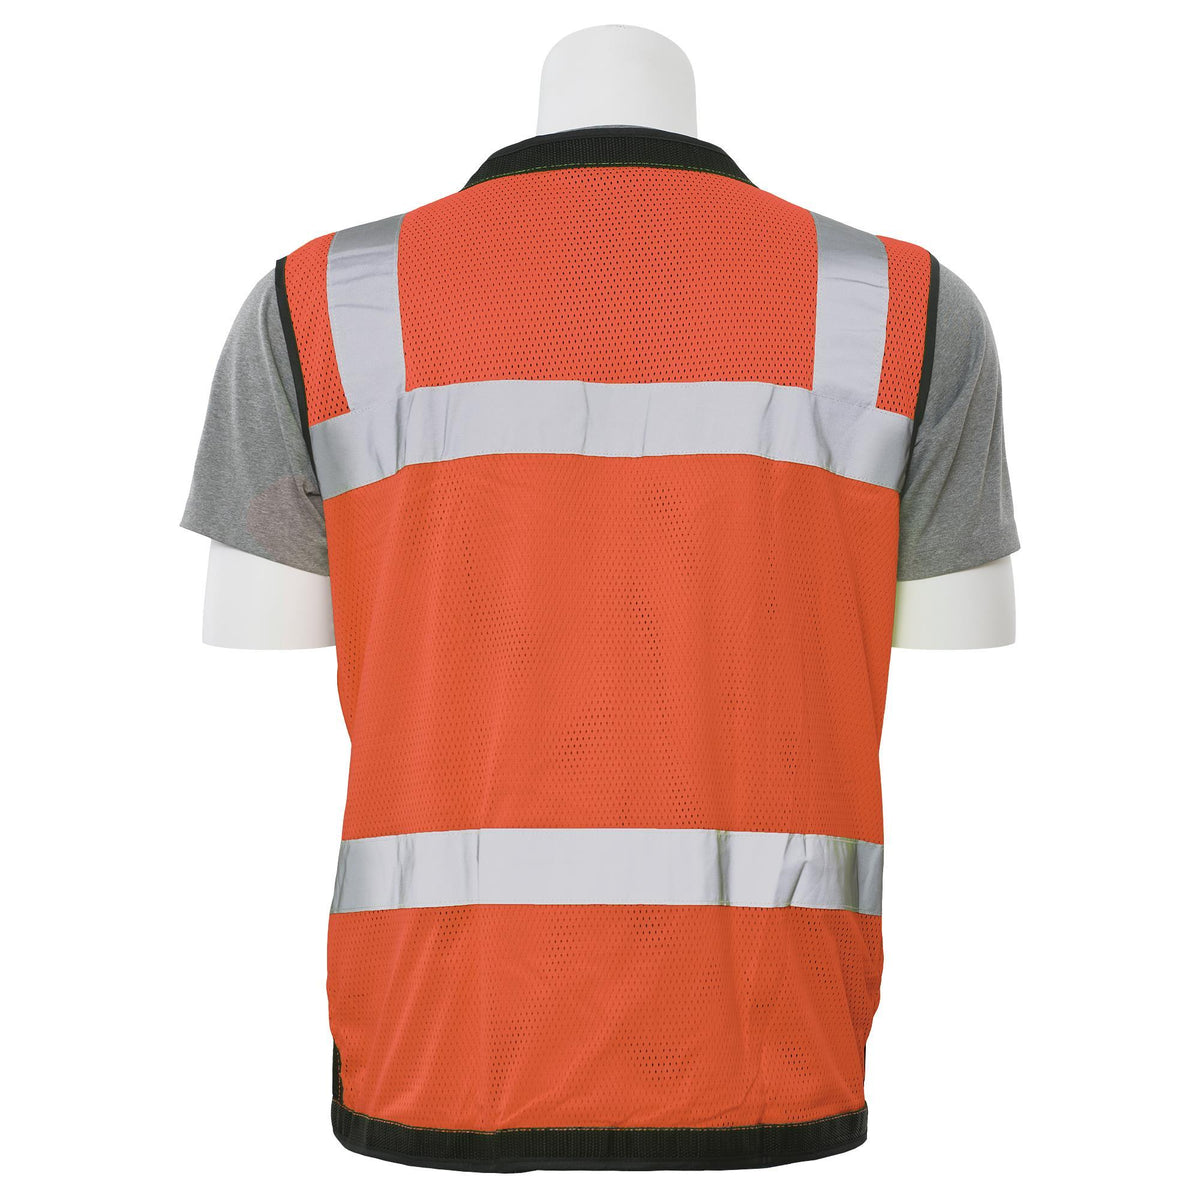 S251 Class 2 Premium Surveyor&#39;s Safety Vest with Tablet Pocket